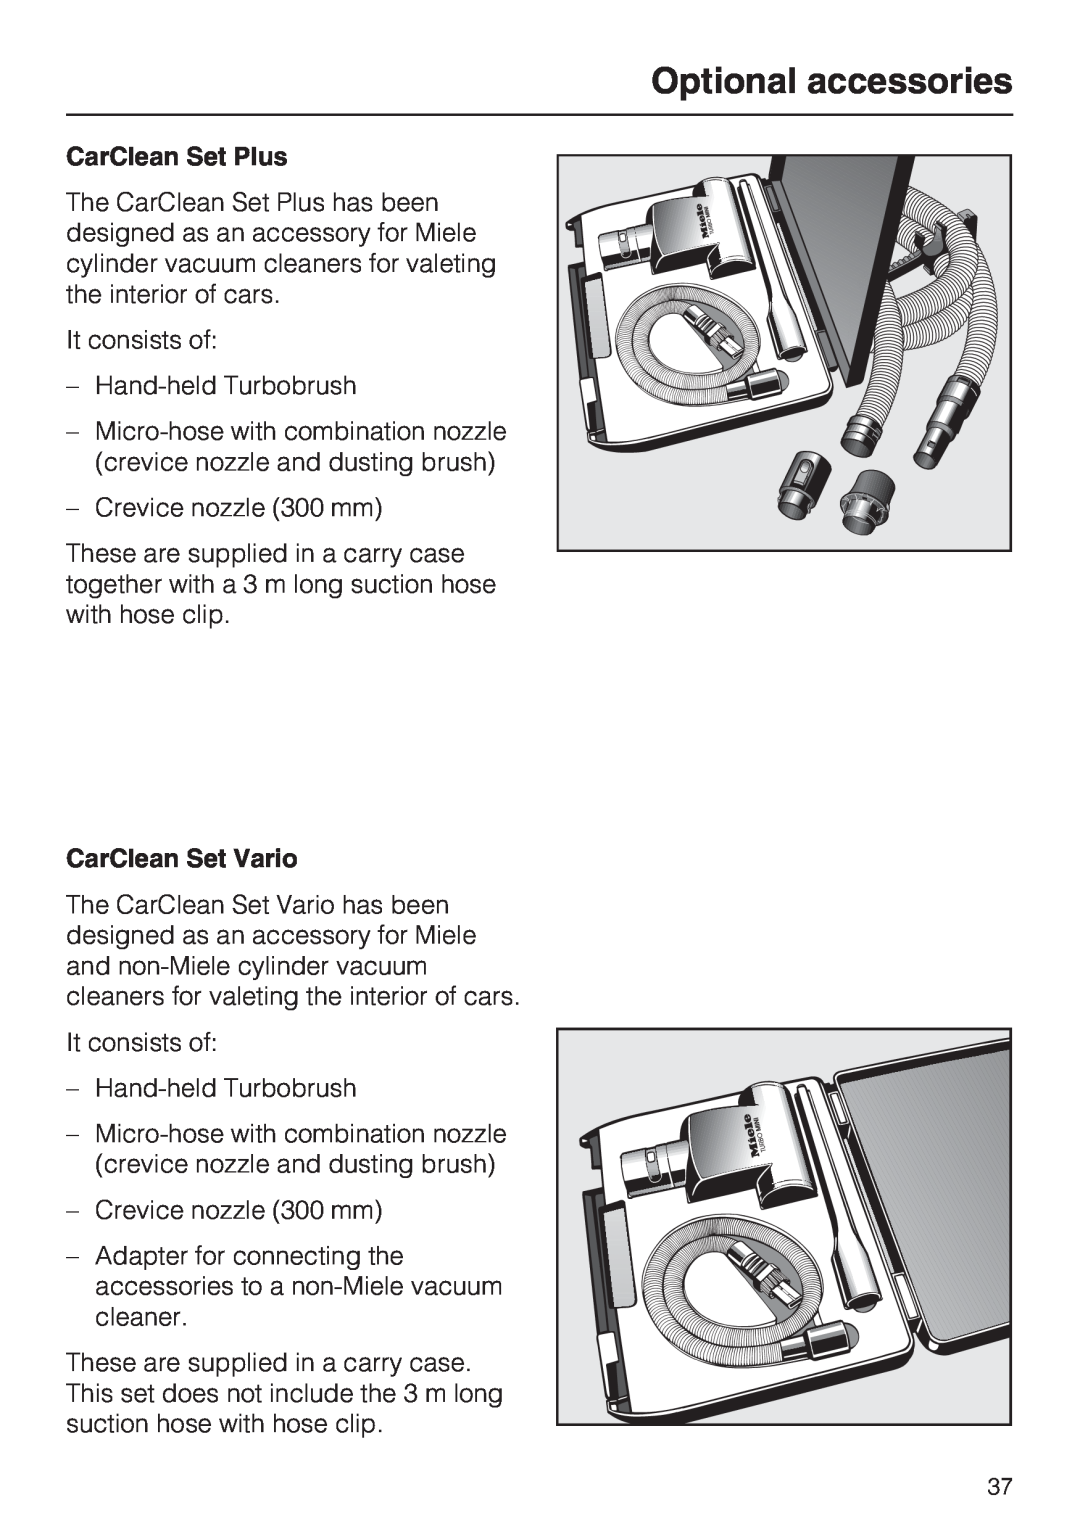 Miele S 4000 Series manual Optional accessories, CarClean Set Plus, CarClean Set Vario 